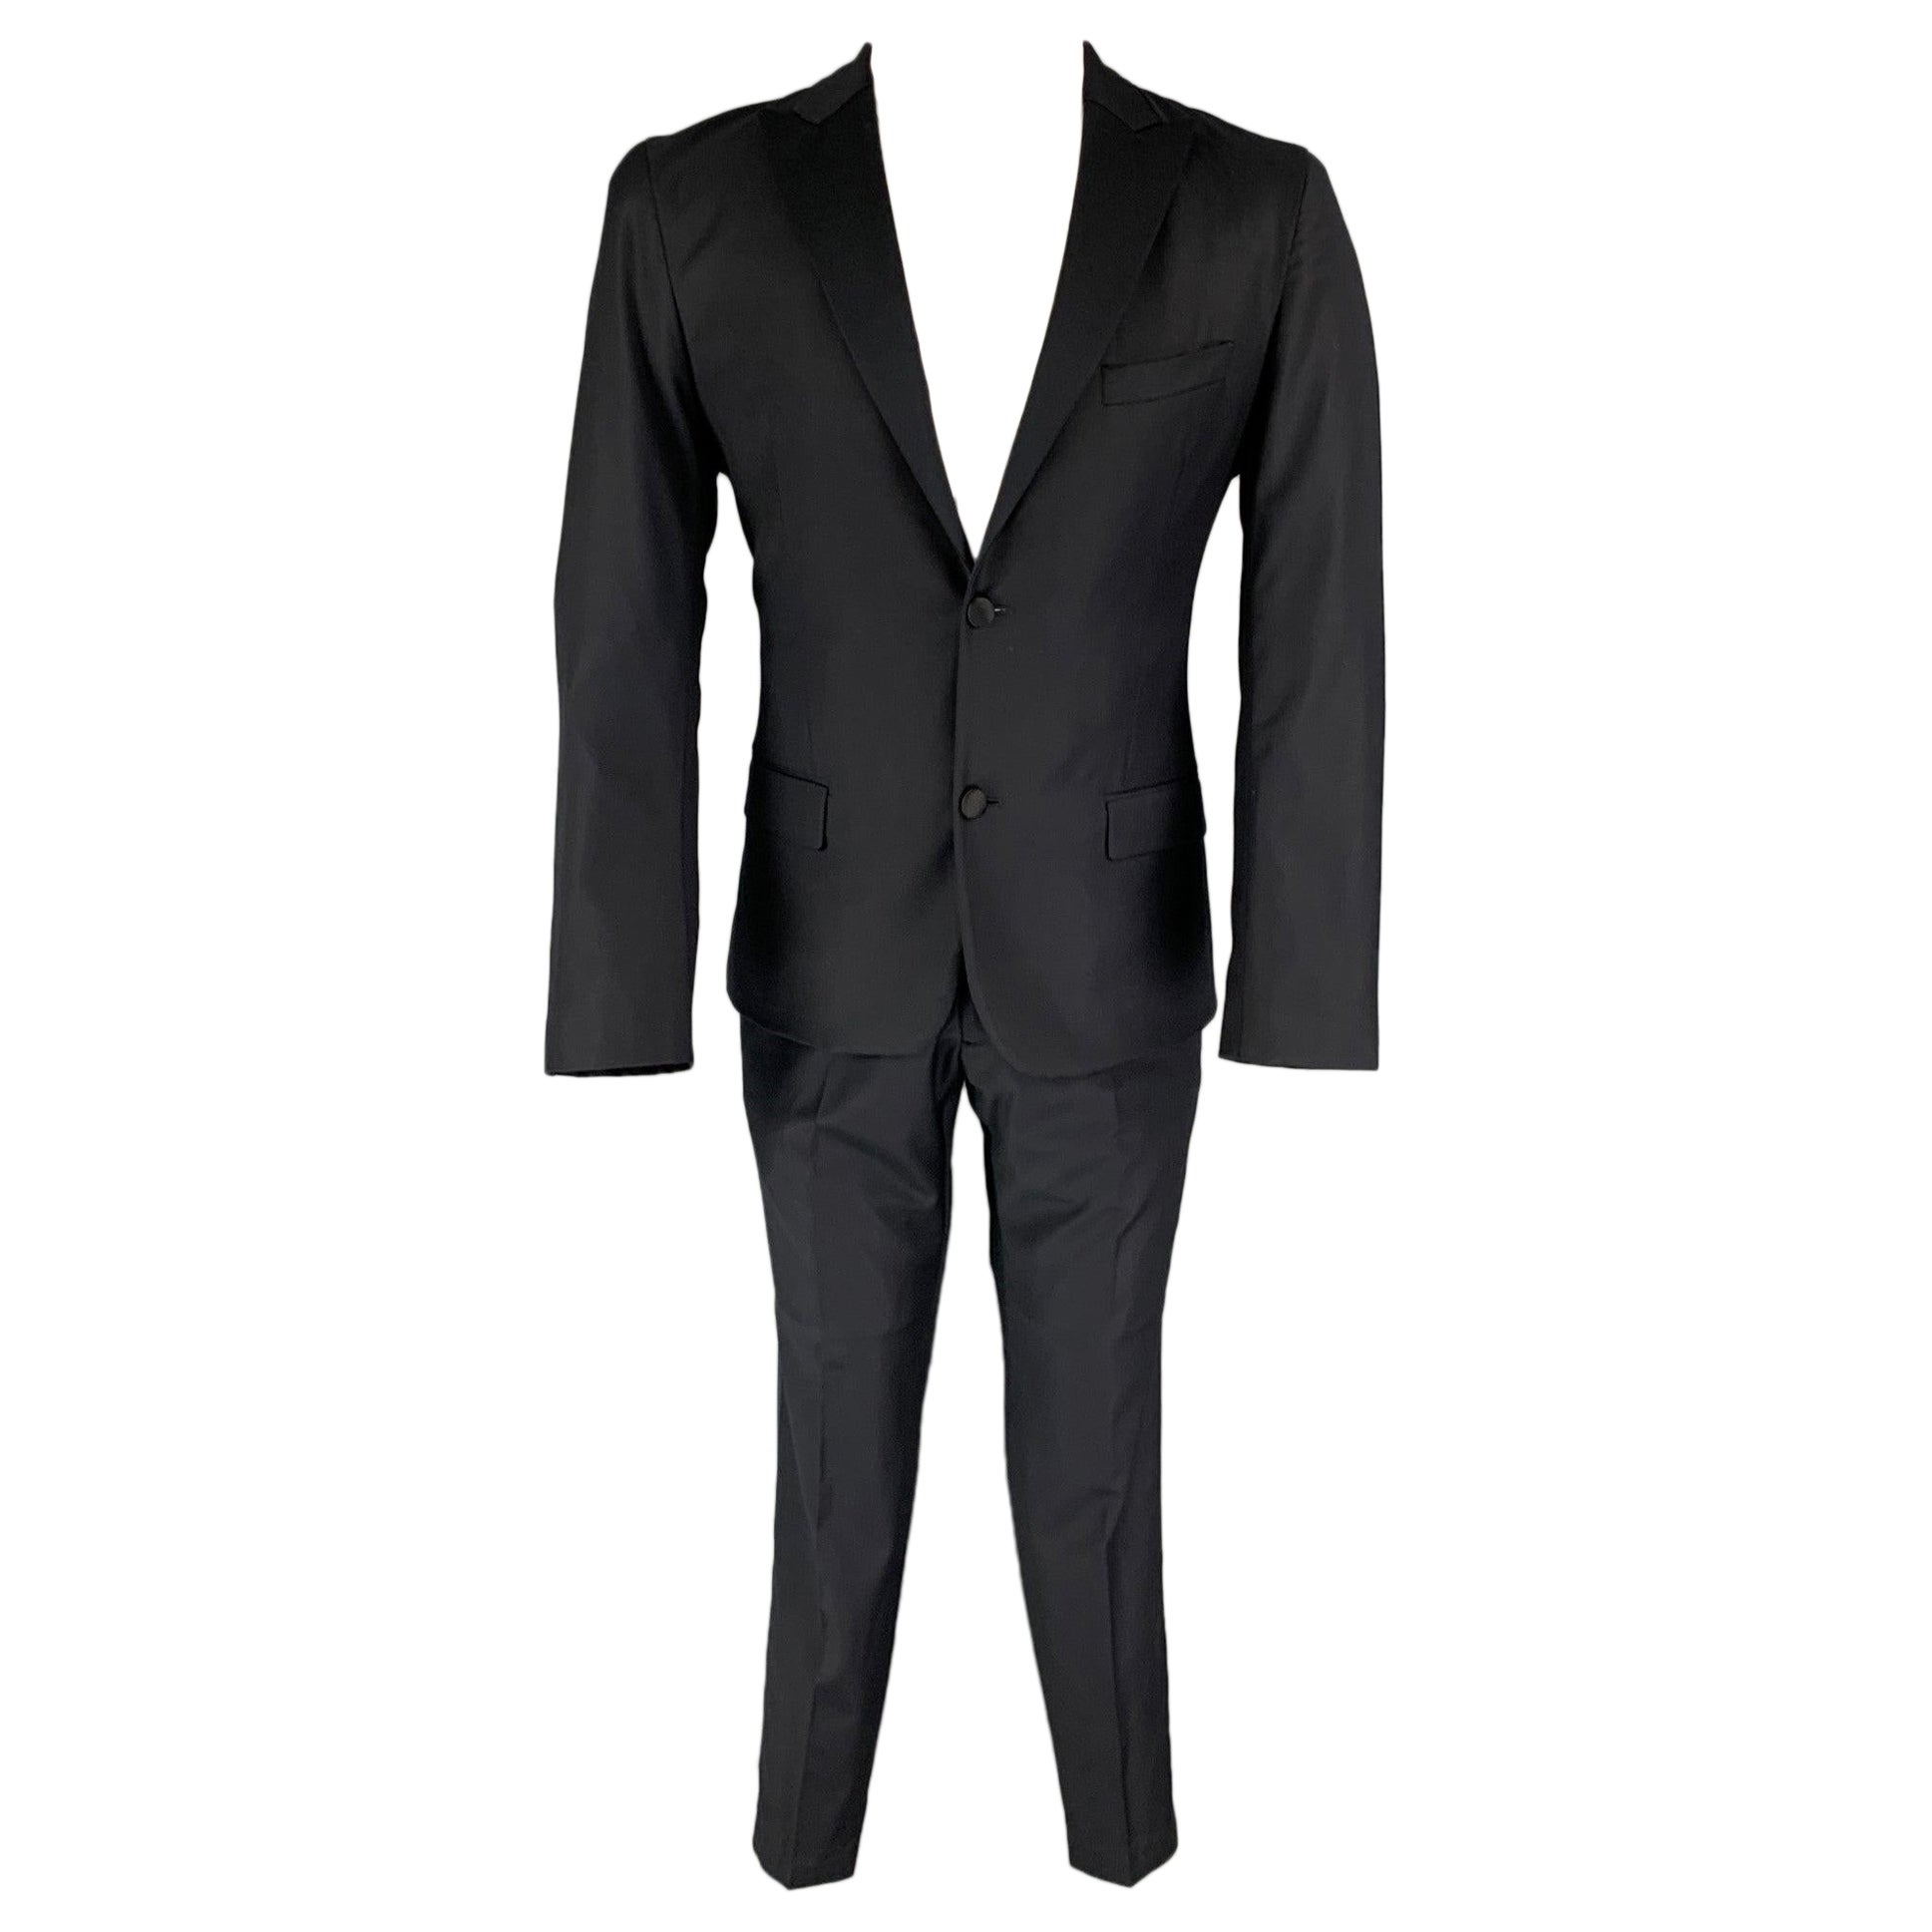 CALVIN KLEIN COLLECTION Size 38 Black Solid Wool Peak Lapel 32 32 Tuxedo For Sale